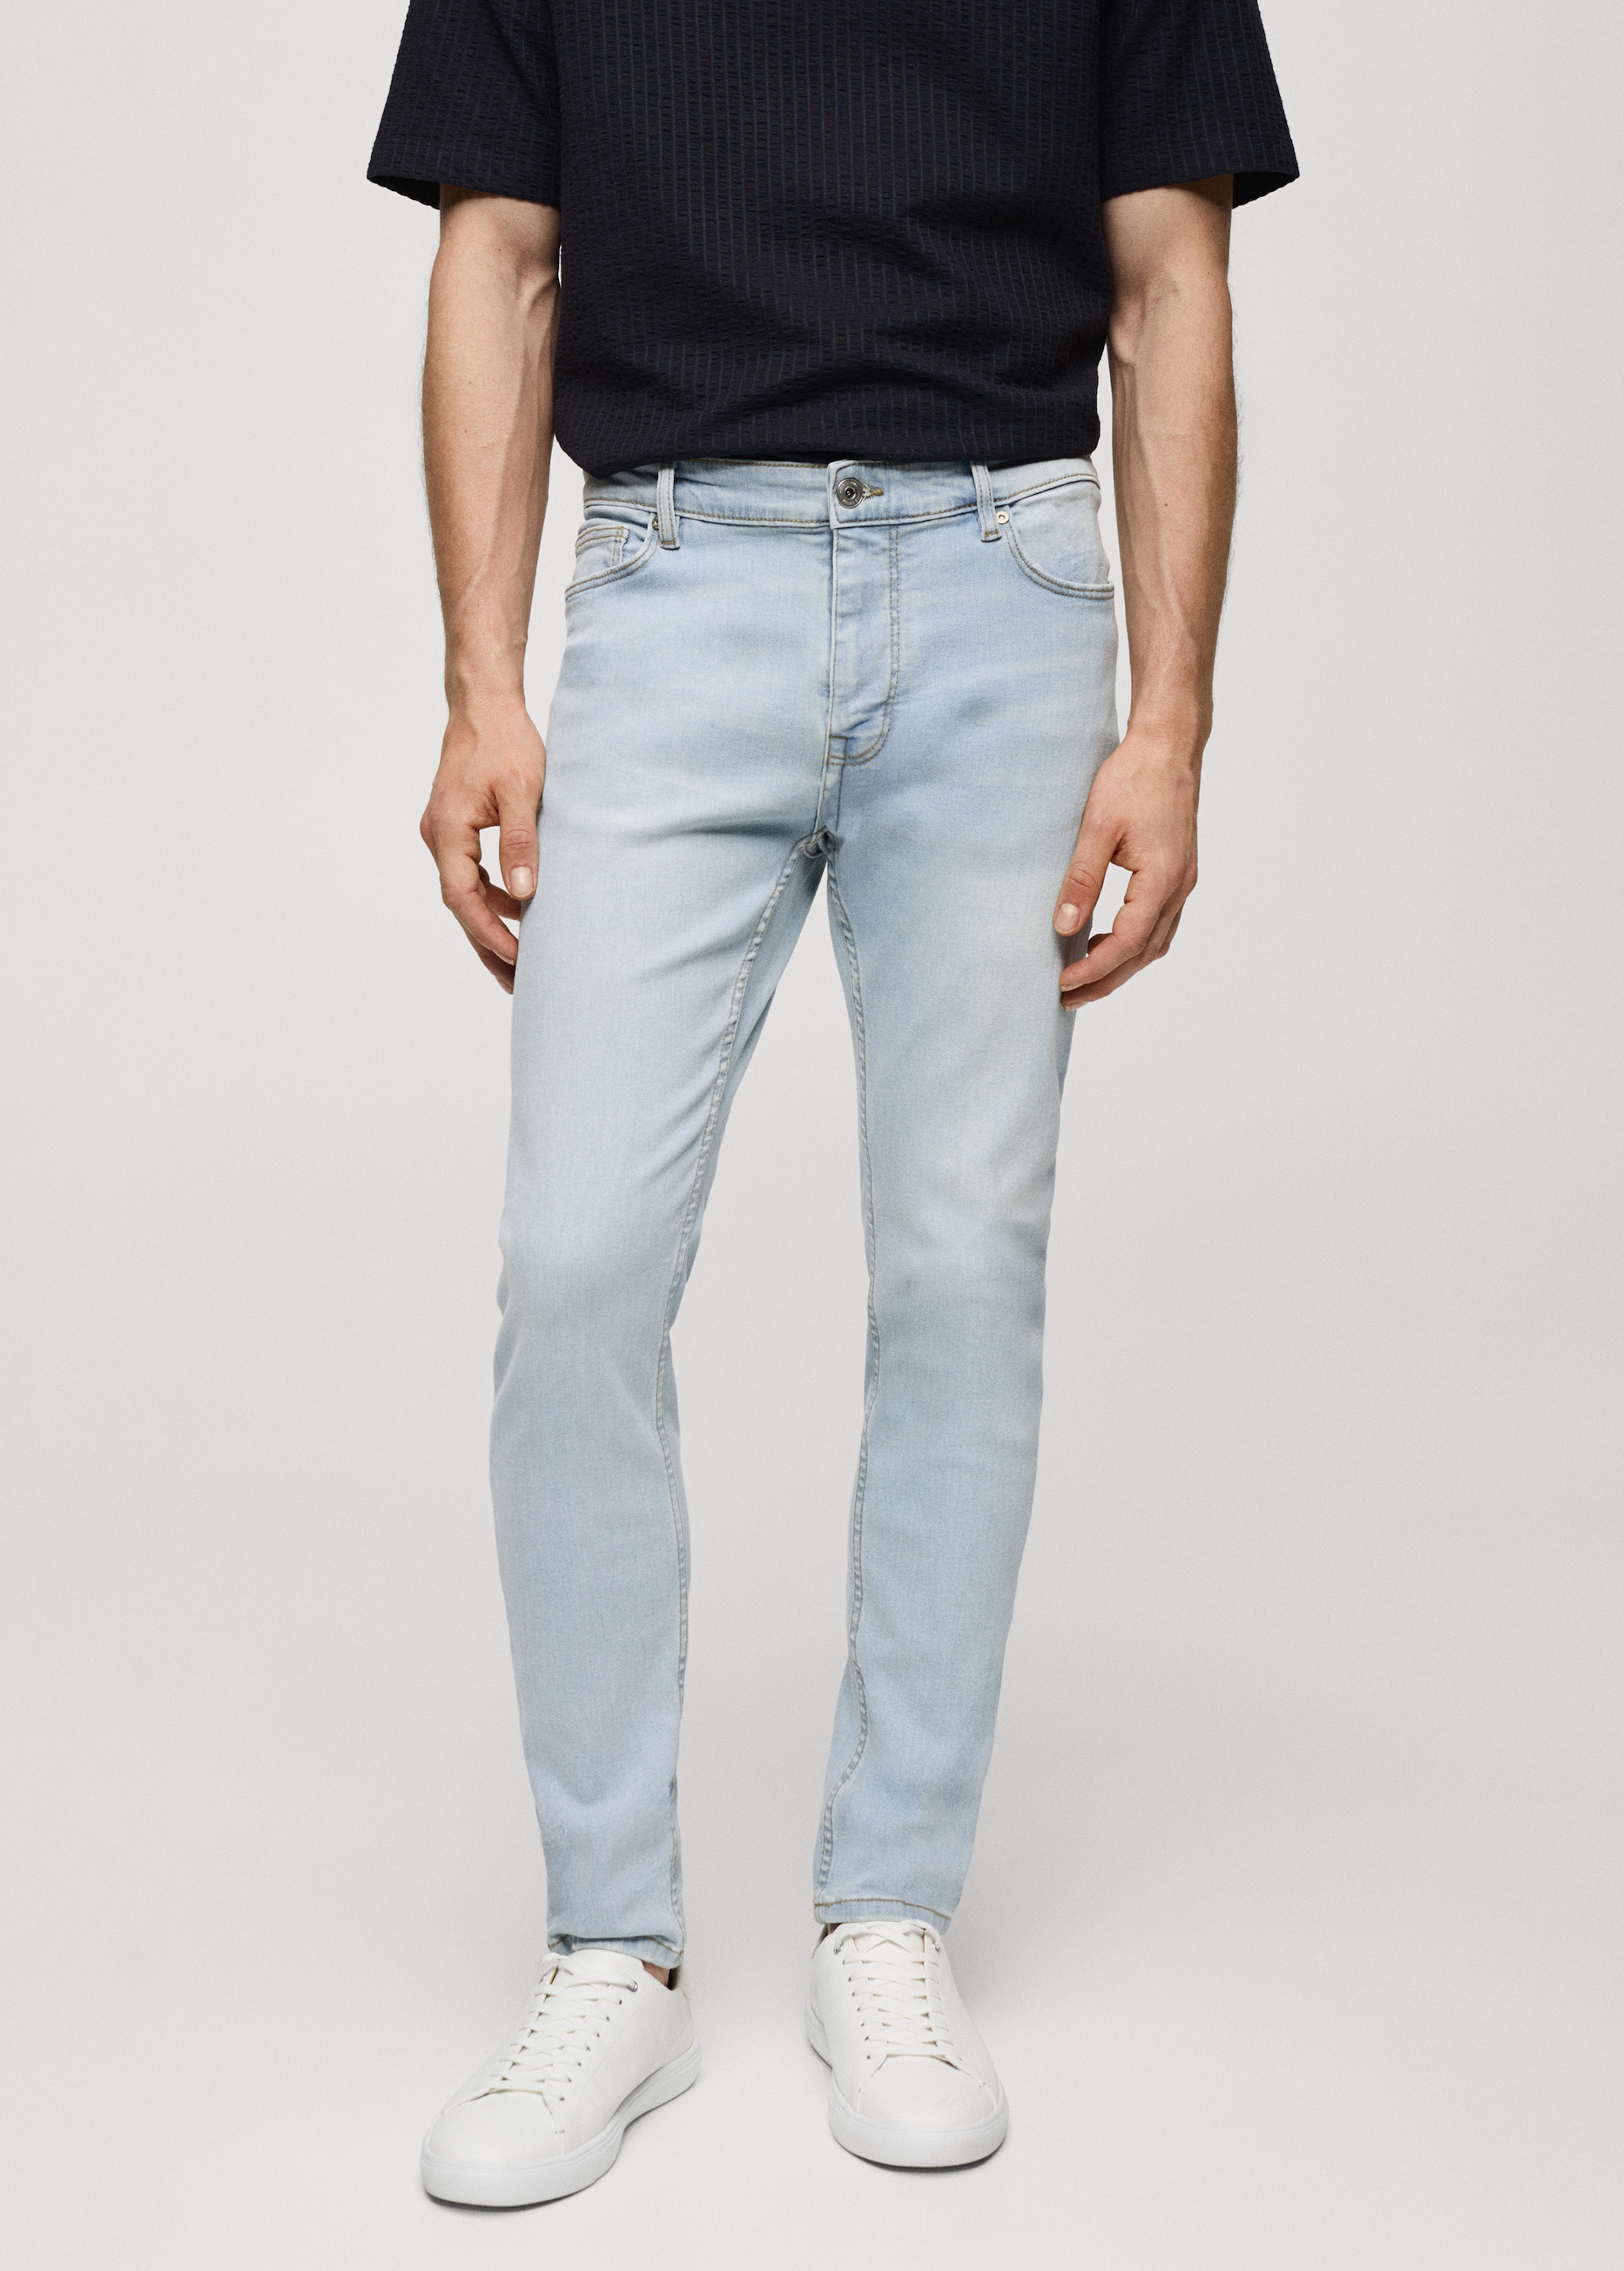 Jude skinny-fit jeans - Middenvlak